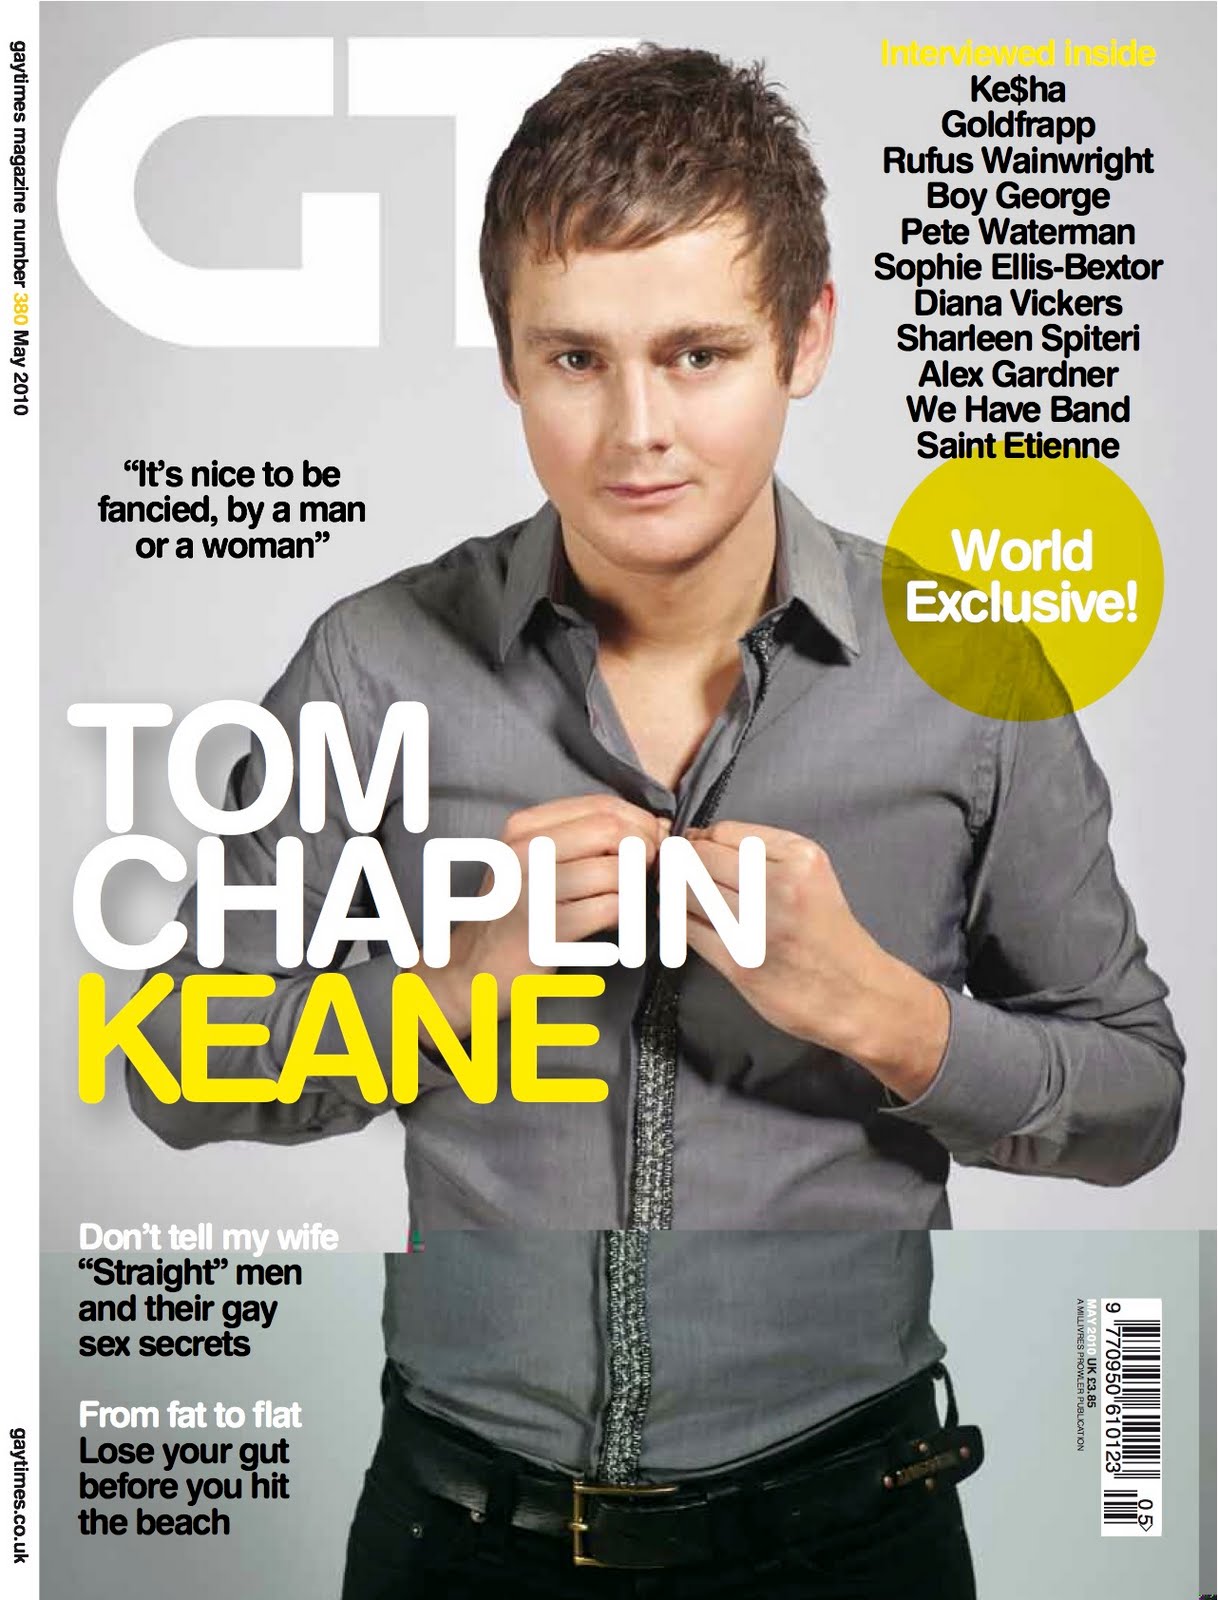 http://4.bp.blogspot.com/_nw8fcHV1bdE/S9d7iKgm8pI/AAAAAAAAHsI/A-v598U6TZY/s1600/Gay+Times+-+Cover+Keane+Tom+Chaplin.jpg